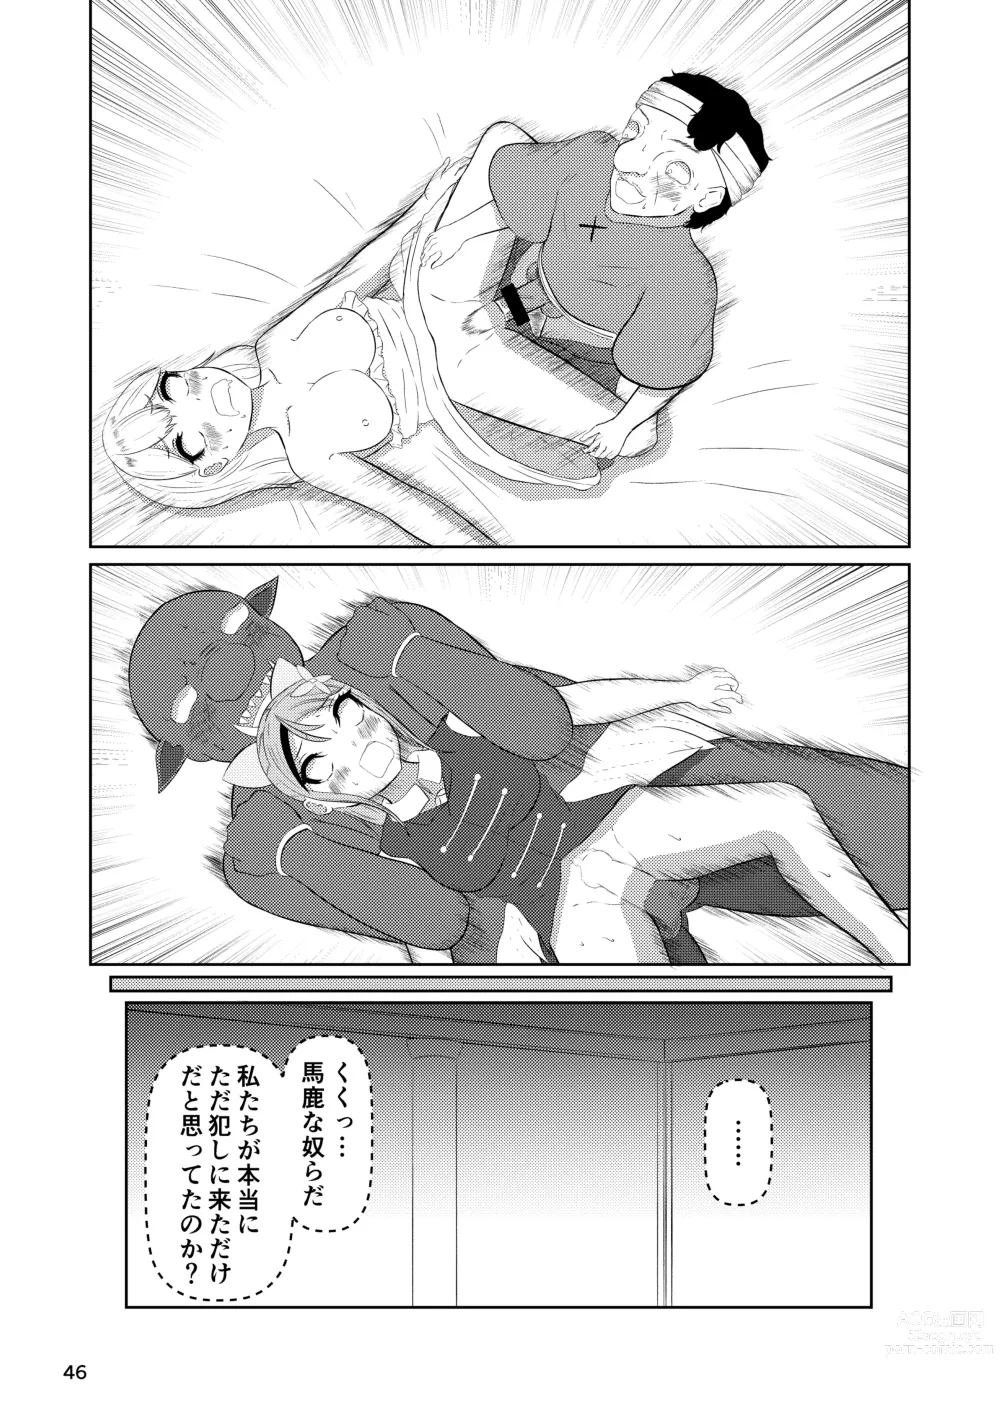 Page 45 of doujinshi Hime to Kishi  wa Nukarumi ni Kawaru